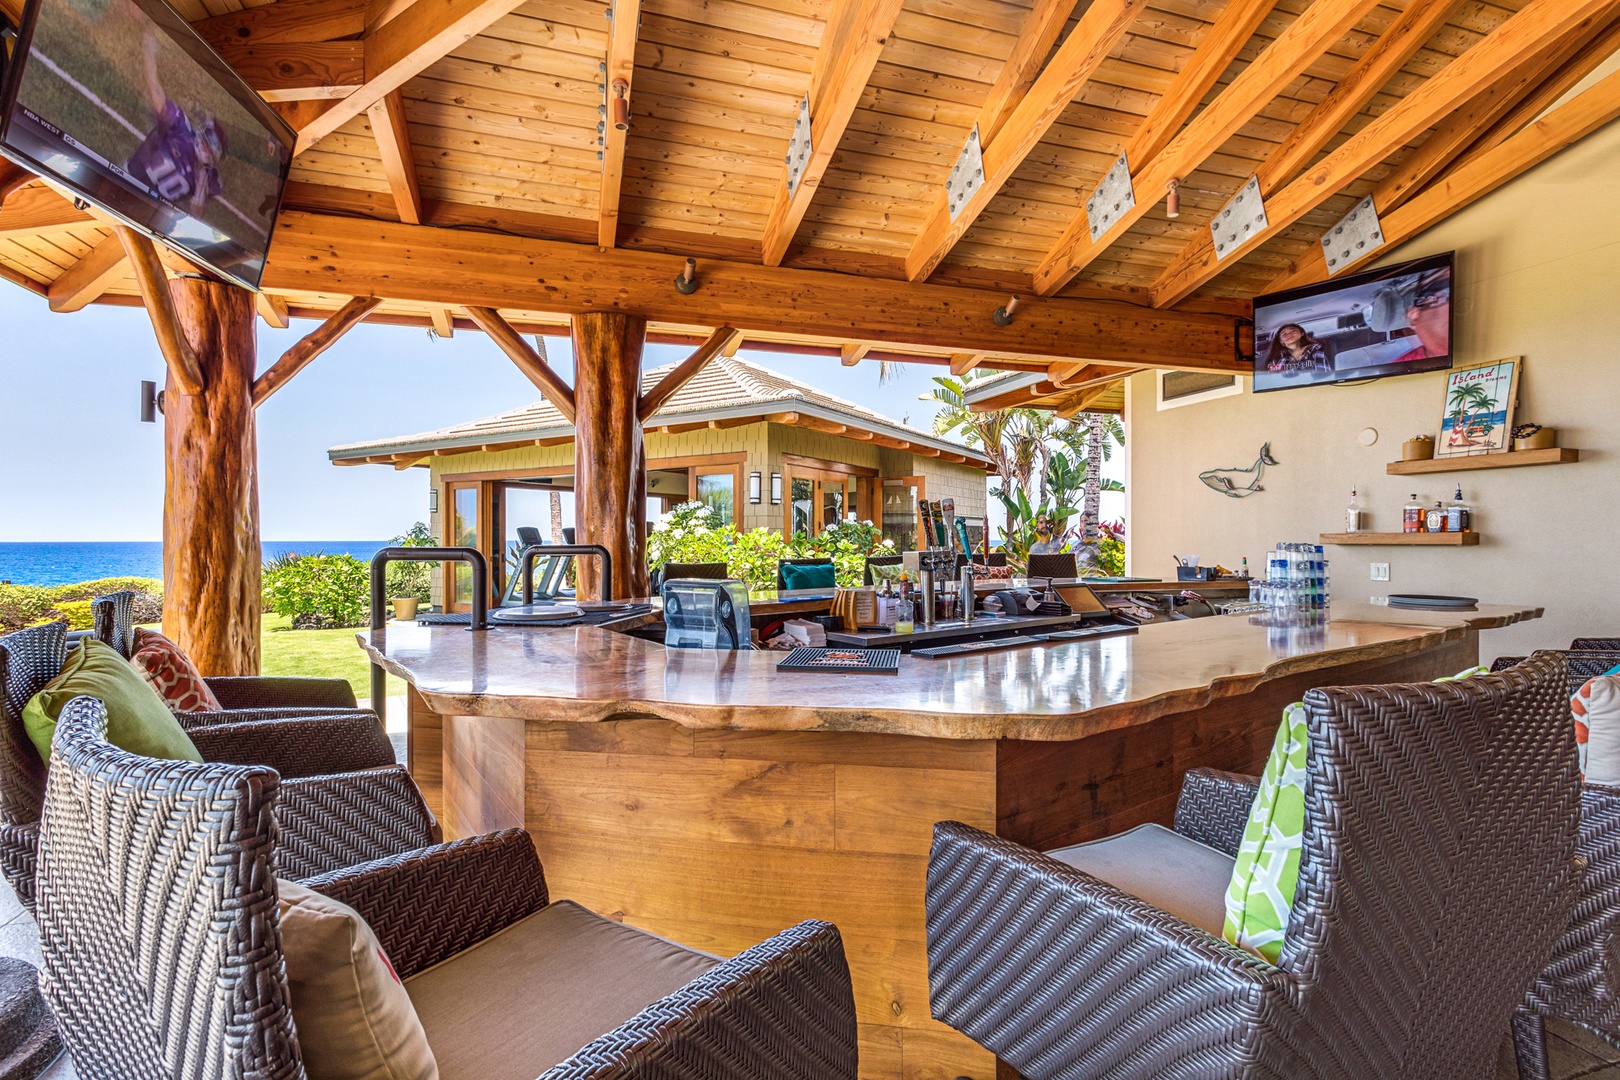 Waikoloa Vacation Rentals, 2BD Hali'i Kai (12C) at Waikoloa Resort - Hali’i Kai’s amenities center bar and lounge seating.